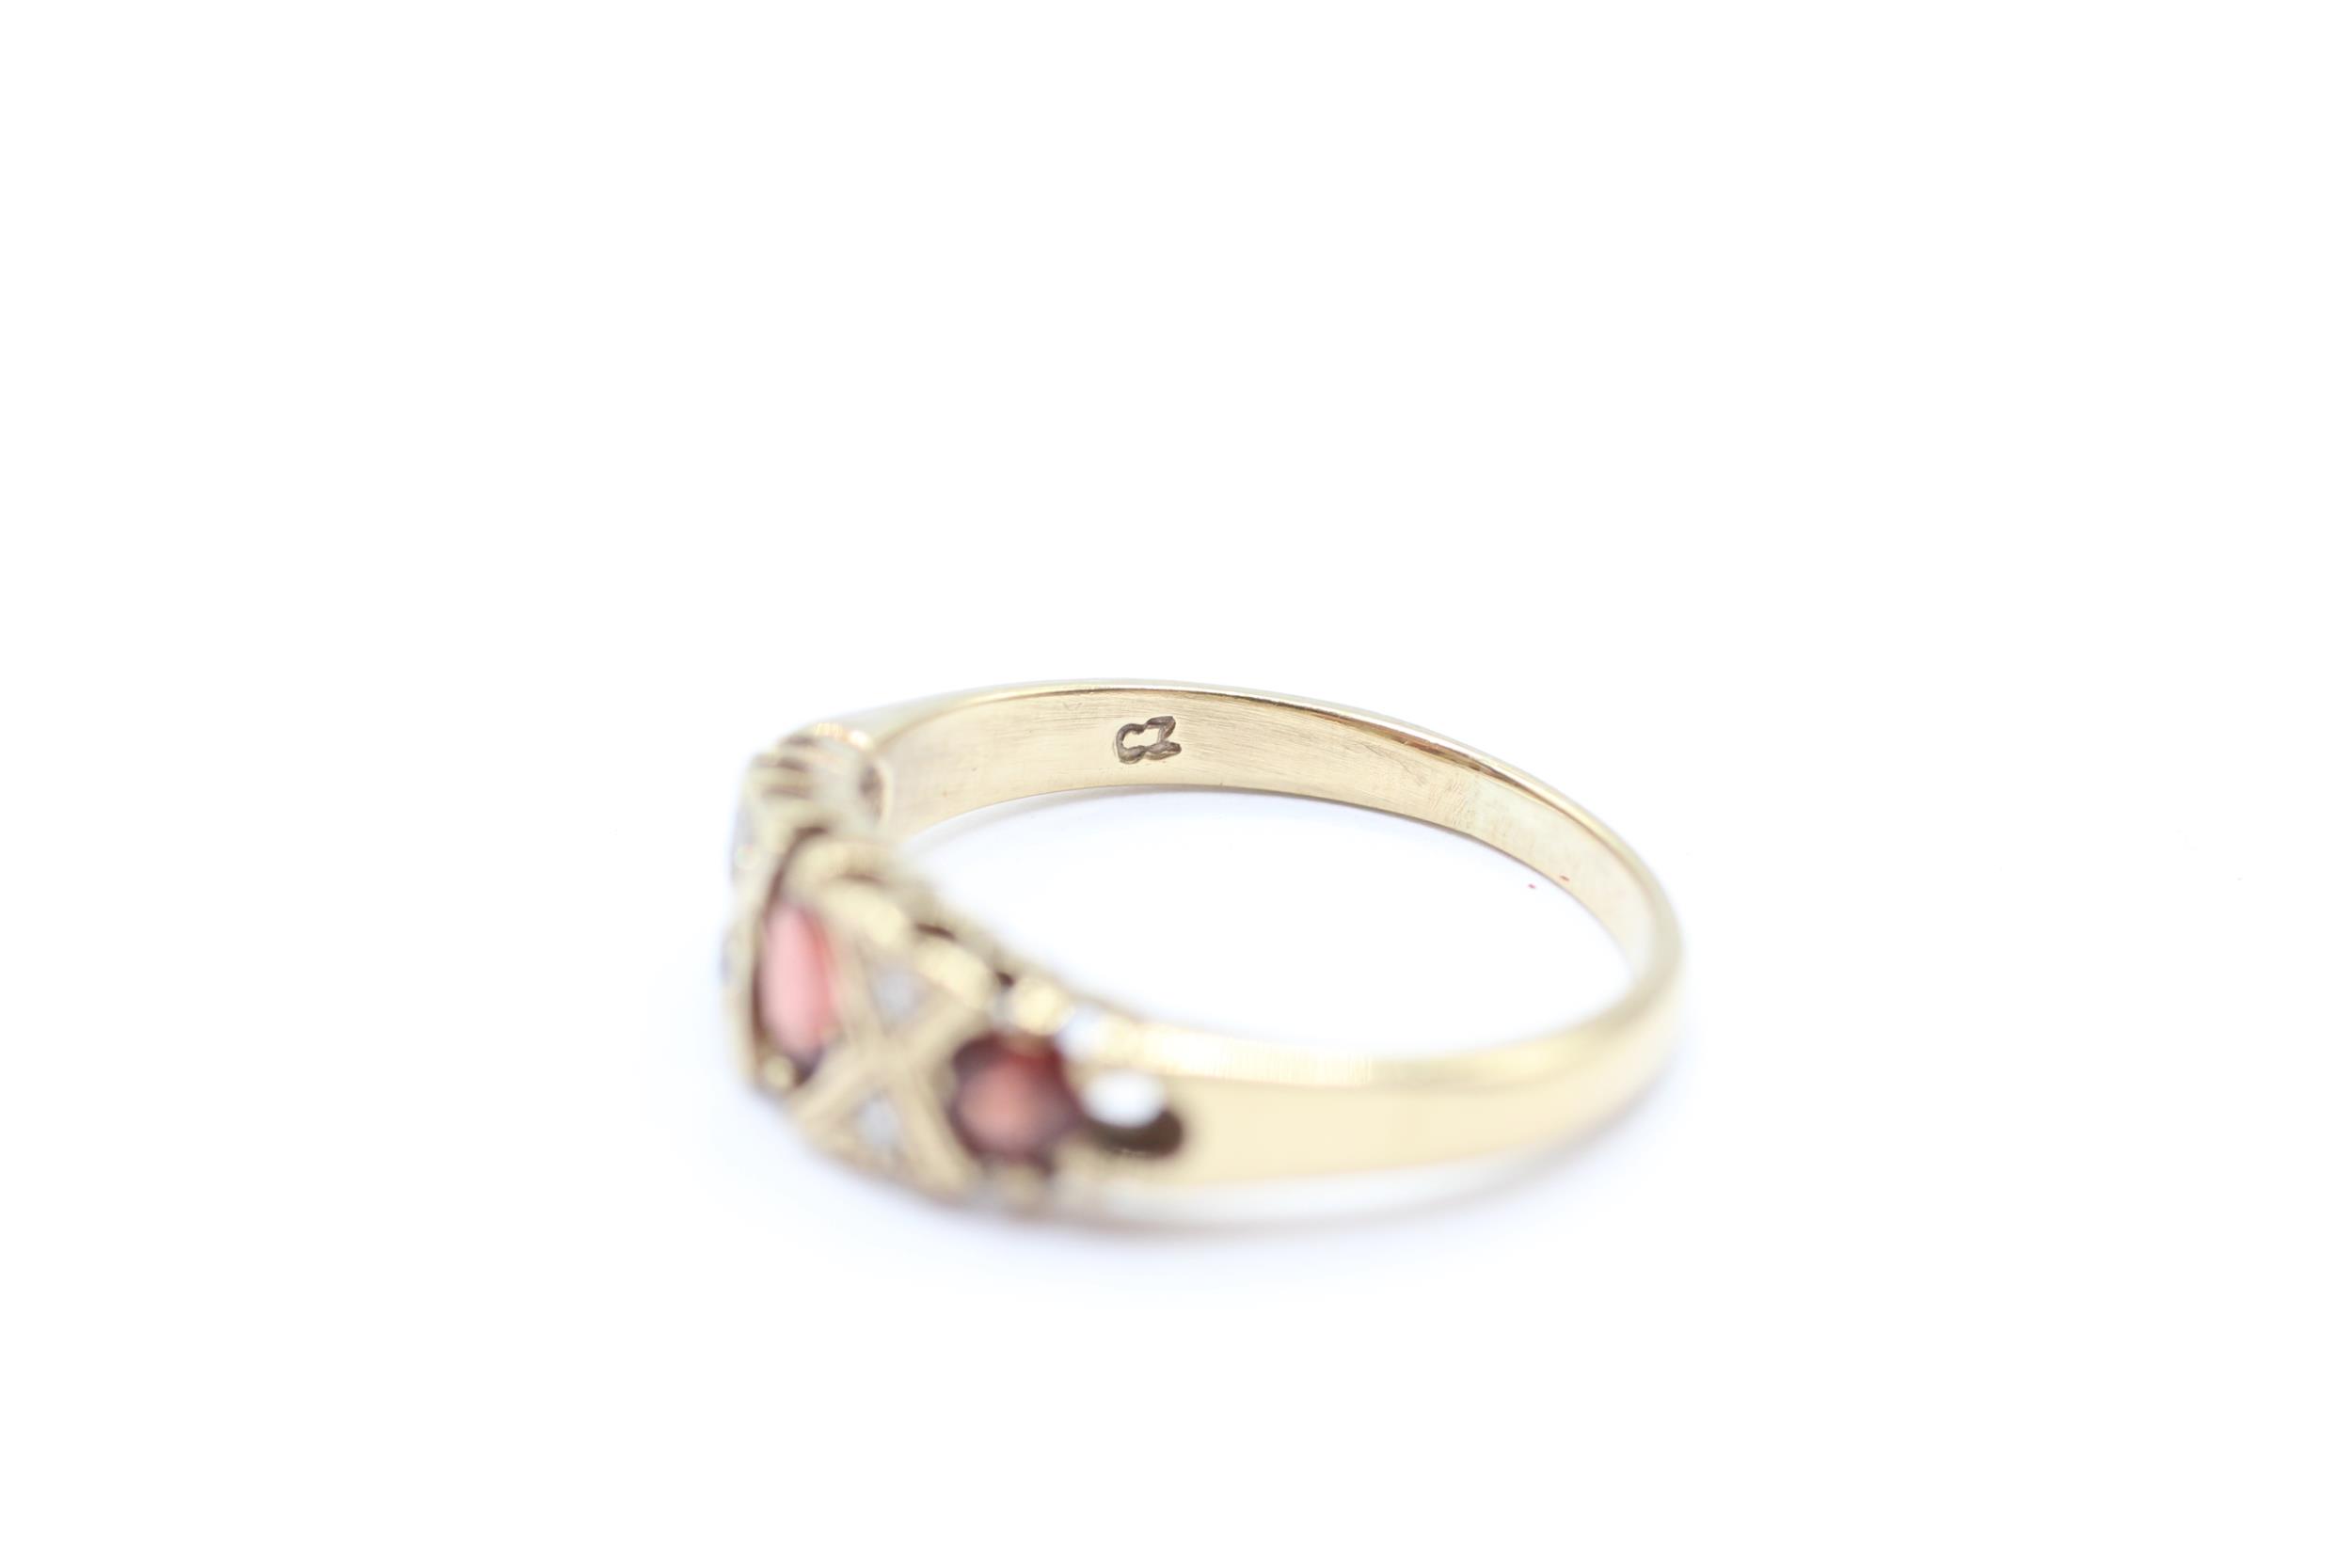 9ct gold vintage garnet & white gemstone dress ring Size Q 1/2 - 3 g - Image 5 of 5